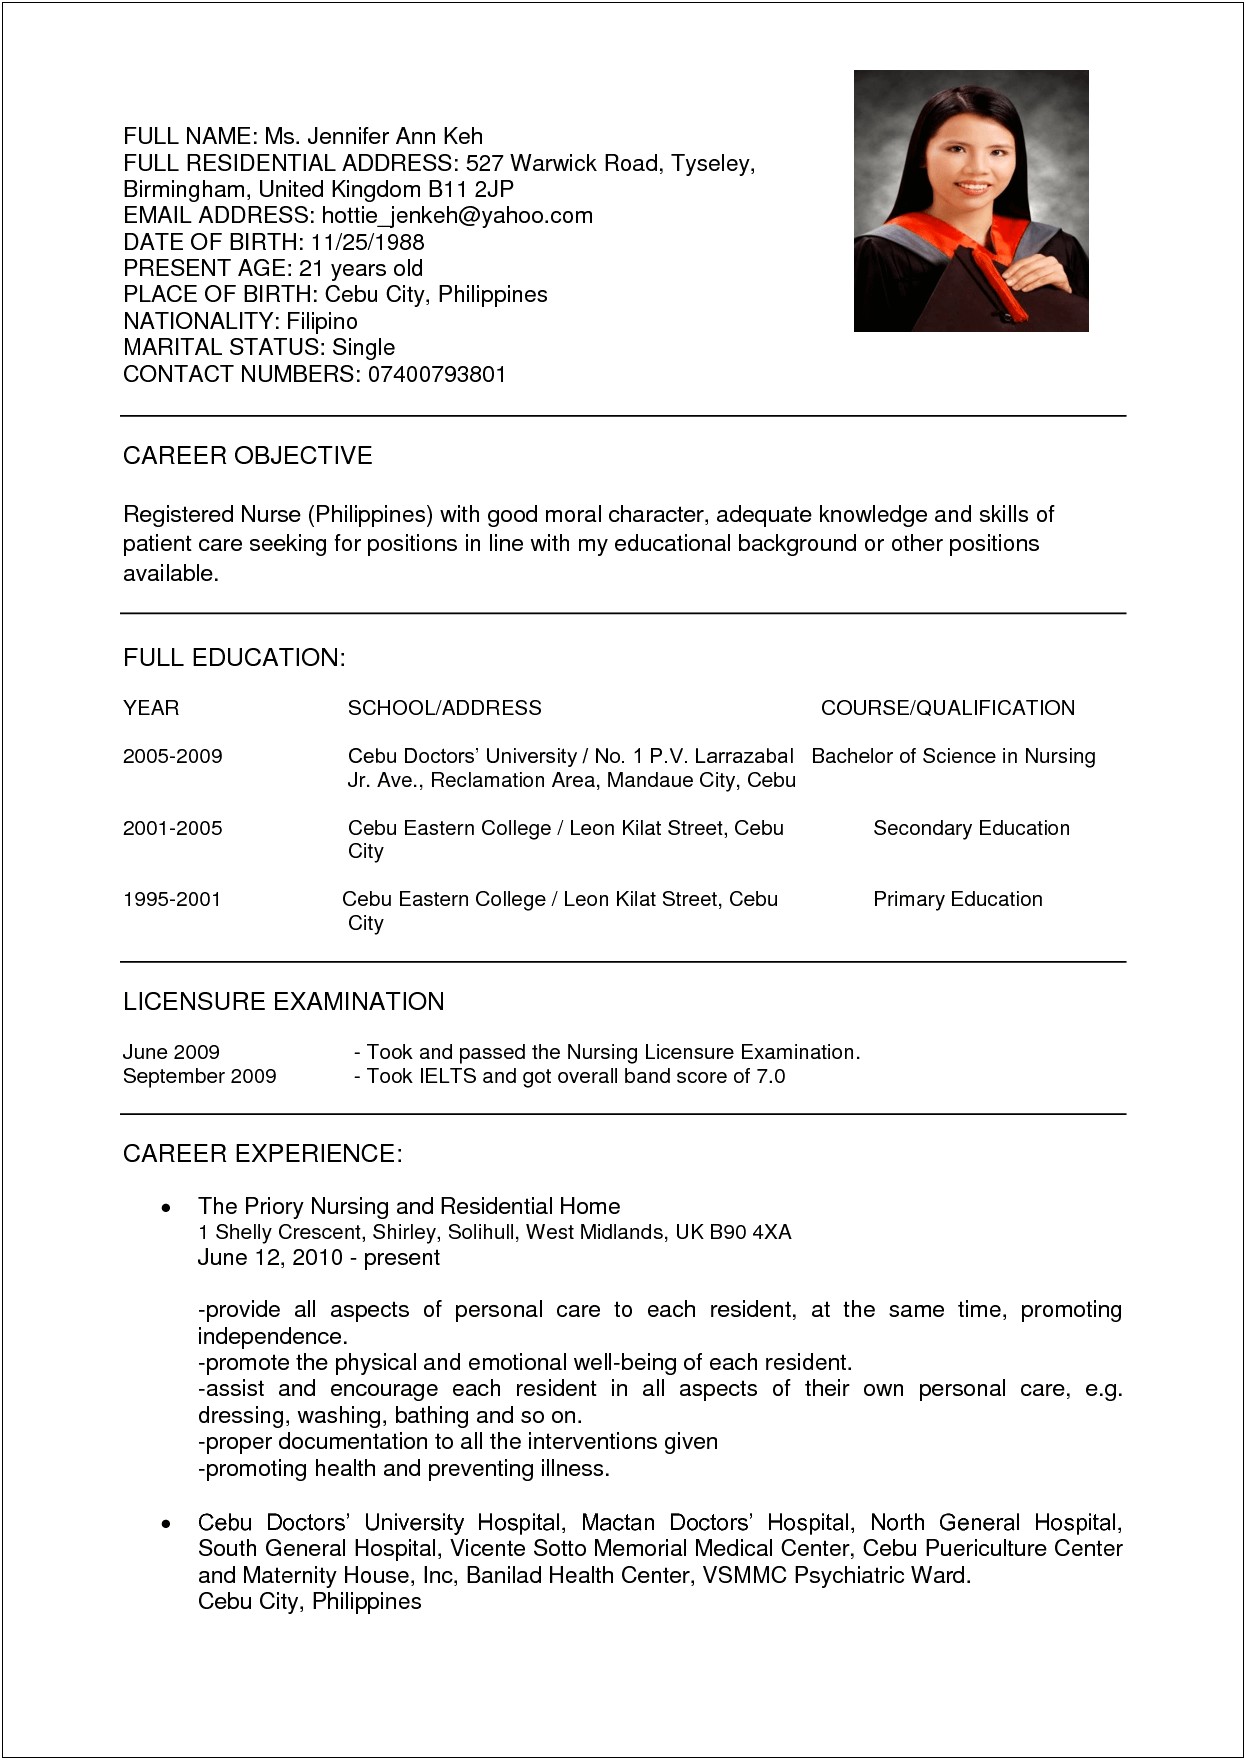 Sample Resume Newly Registered Nurse Philippines